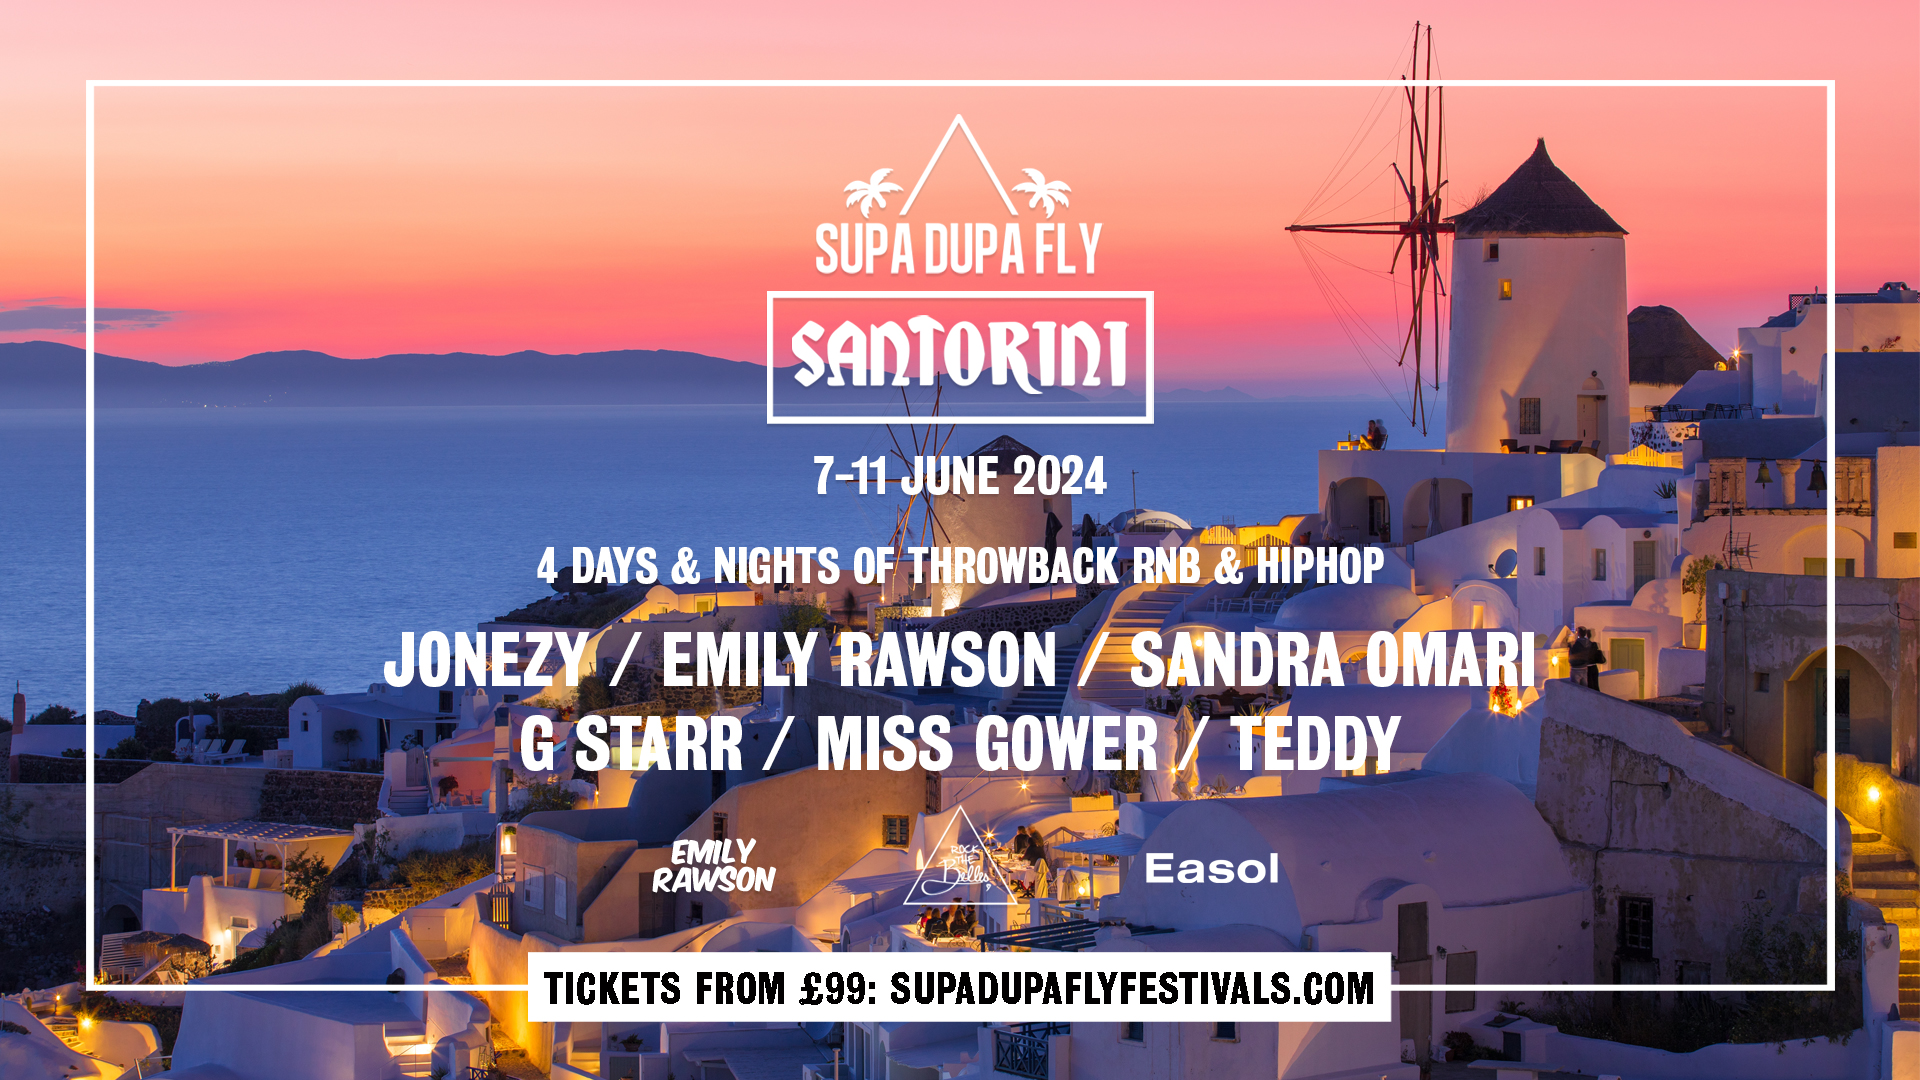 Supa Dupa Fly Santorini 2024 at Enigma Club Santorini, Thira on 7th Jun